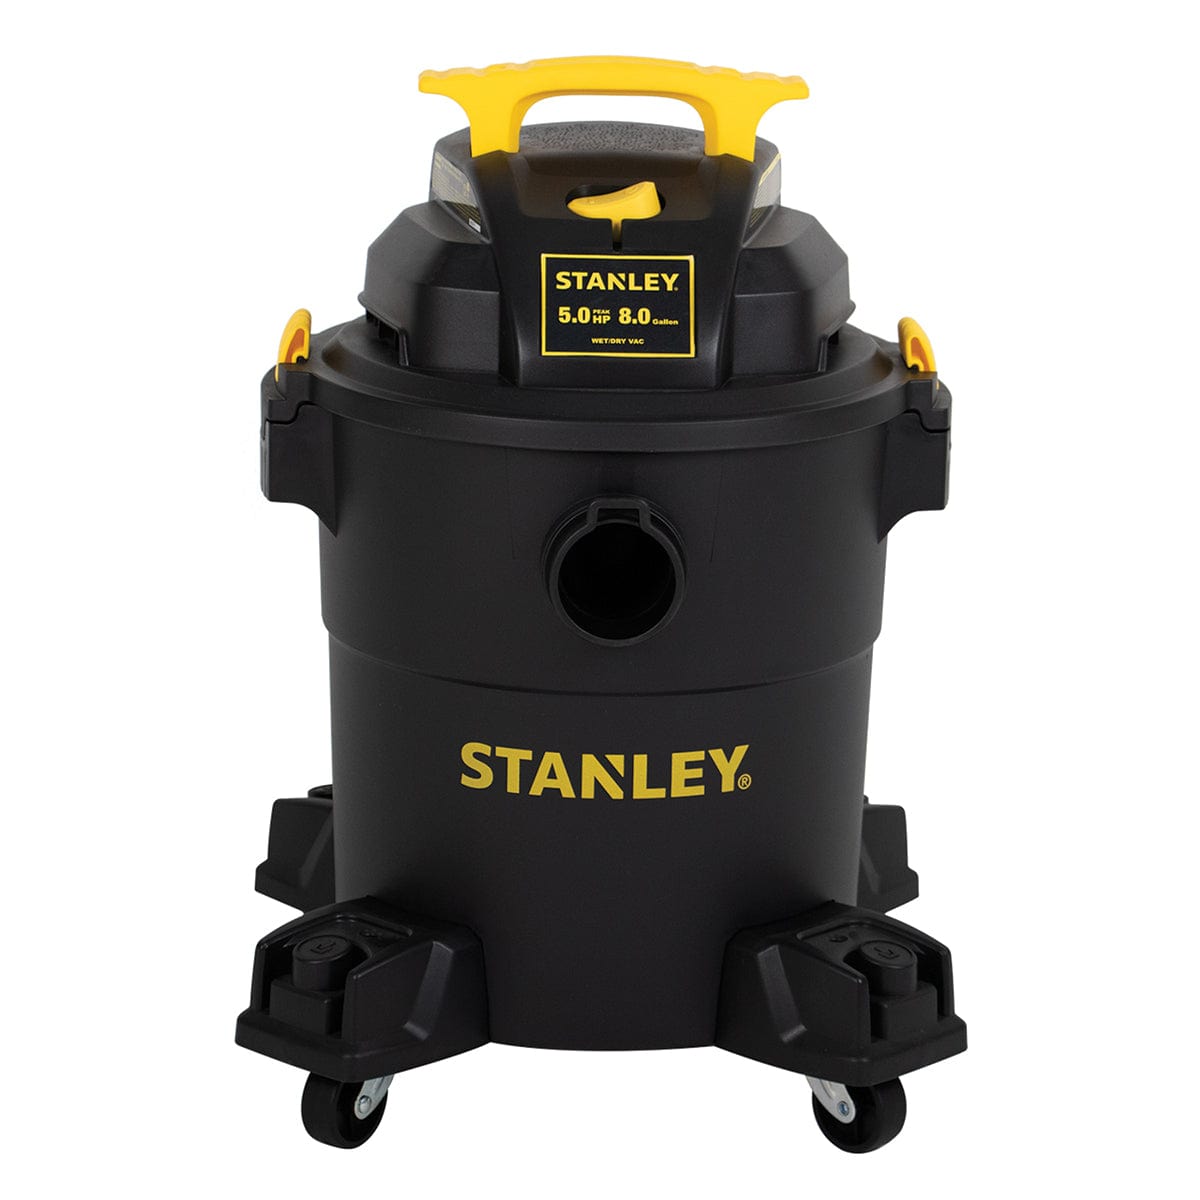 Stanley 6 Gallon 4 MAX HP Wet/Dry Vac